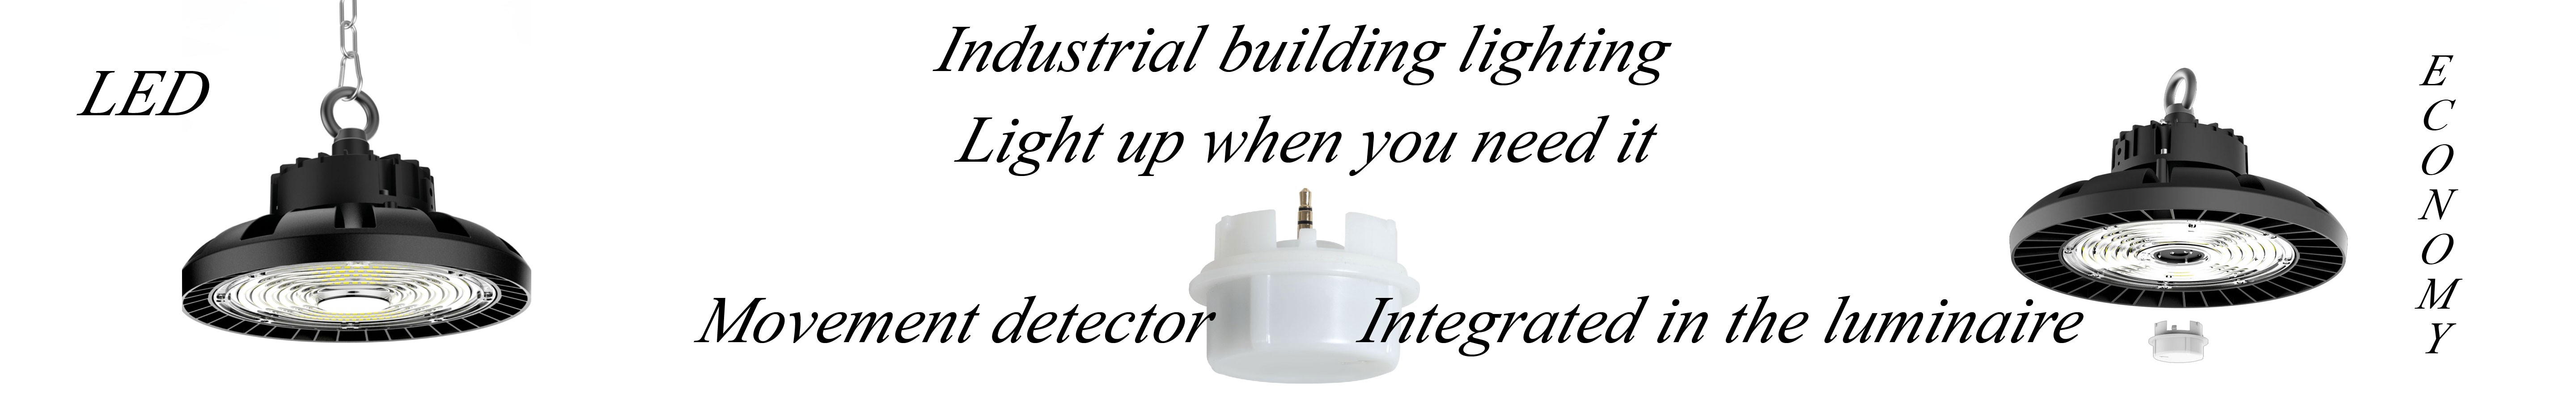 Lighting for industrial buildings